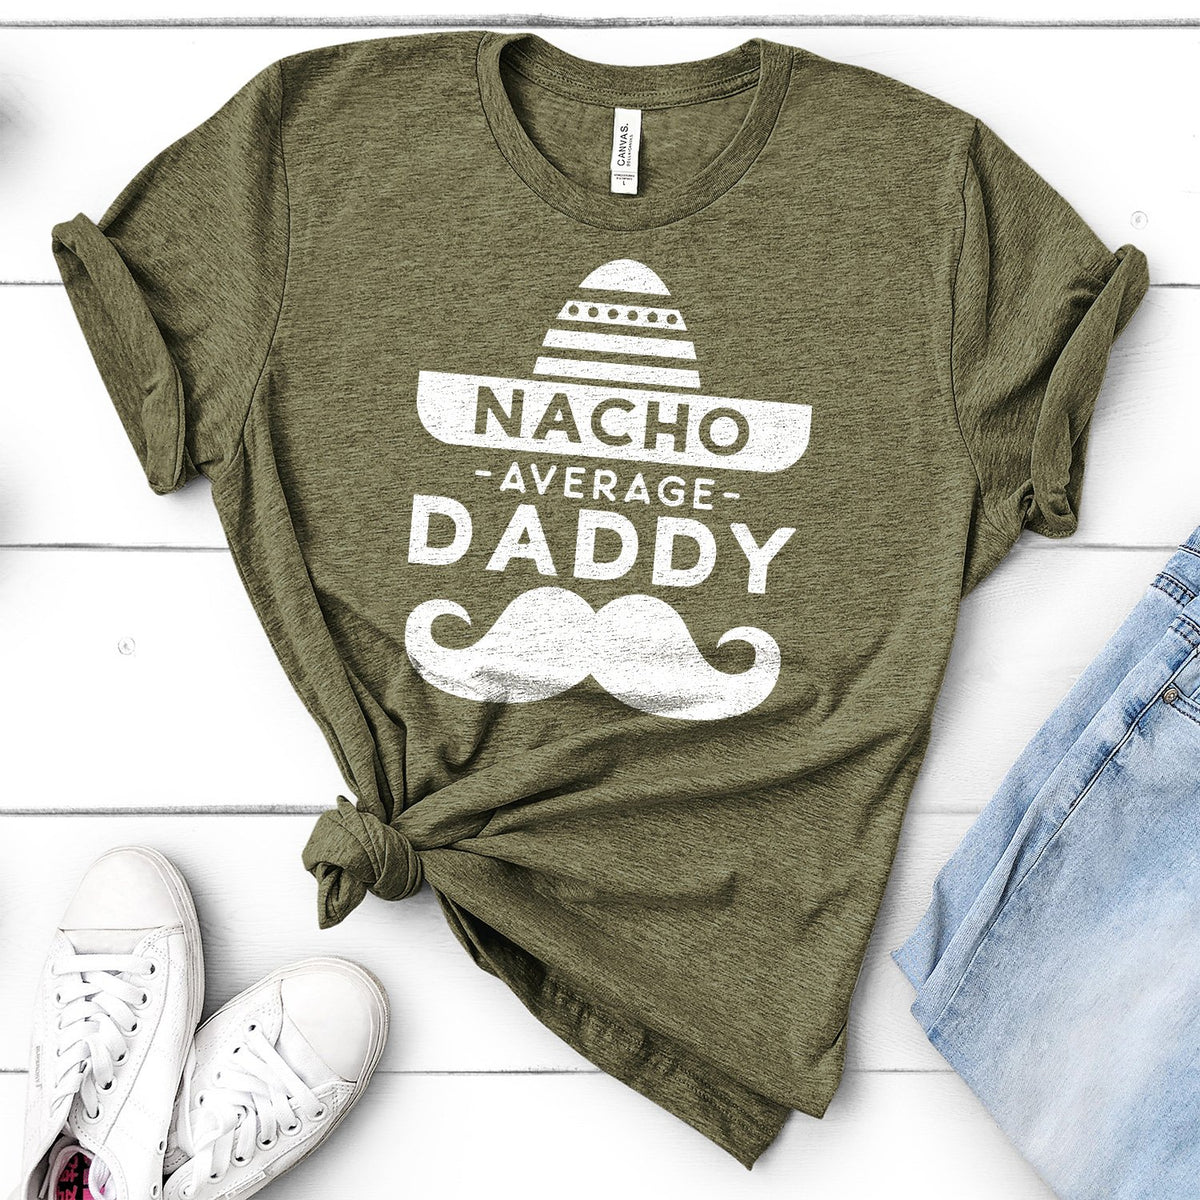 Nacho Average Daddy with Mustache - Short Sleeve Tee Shirt